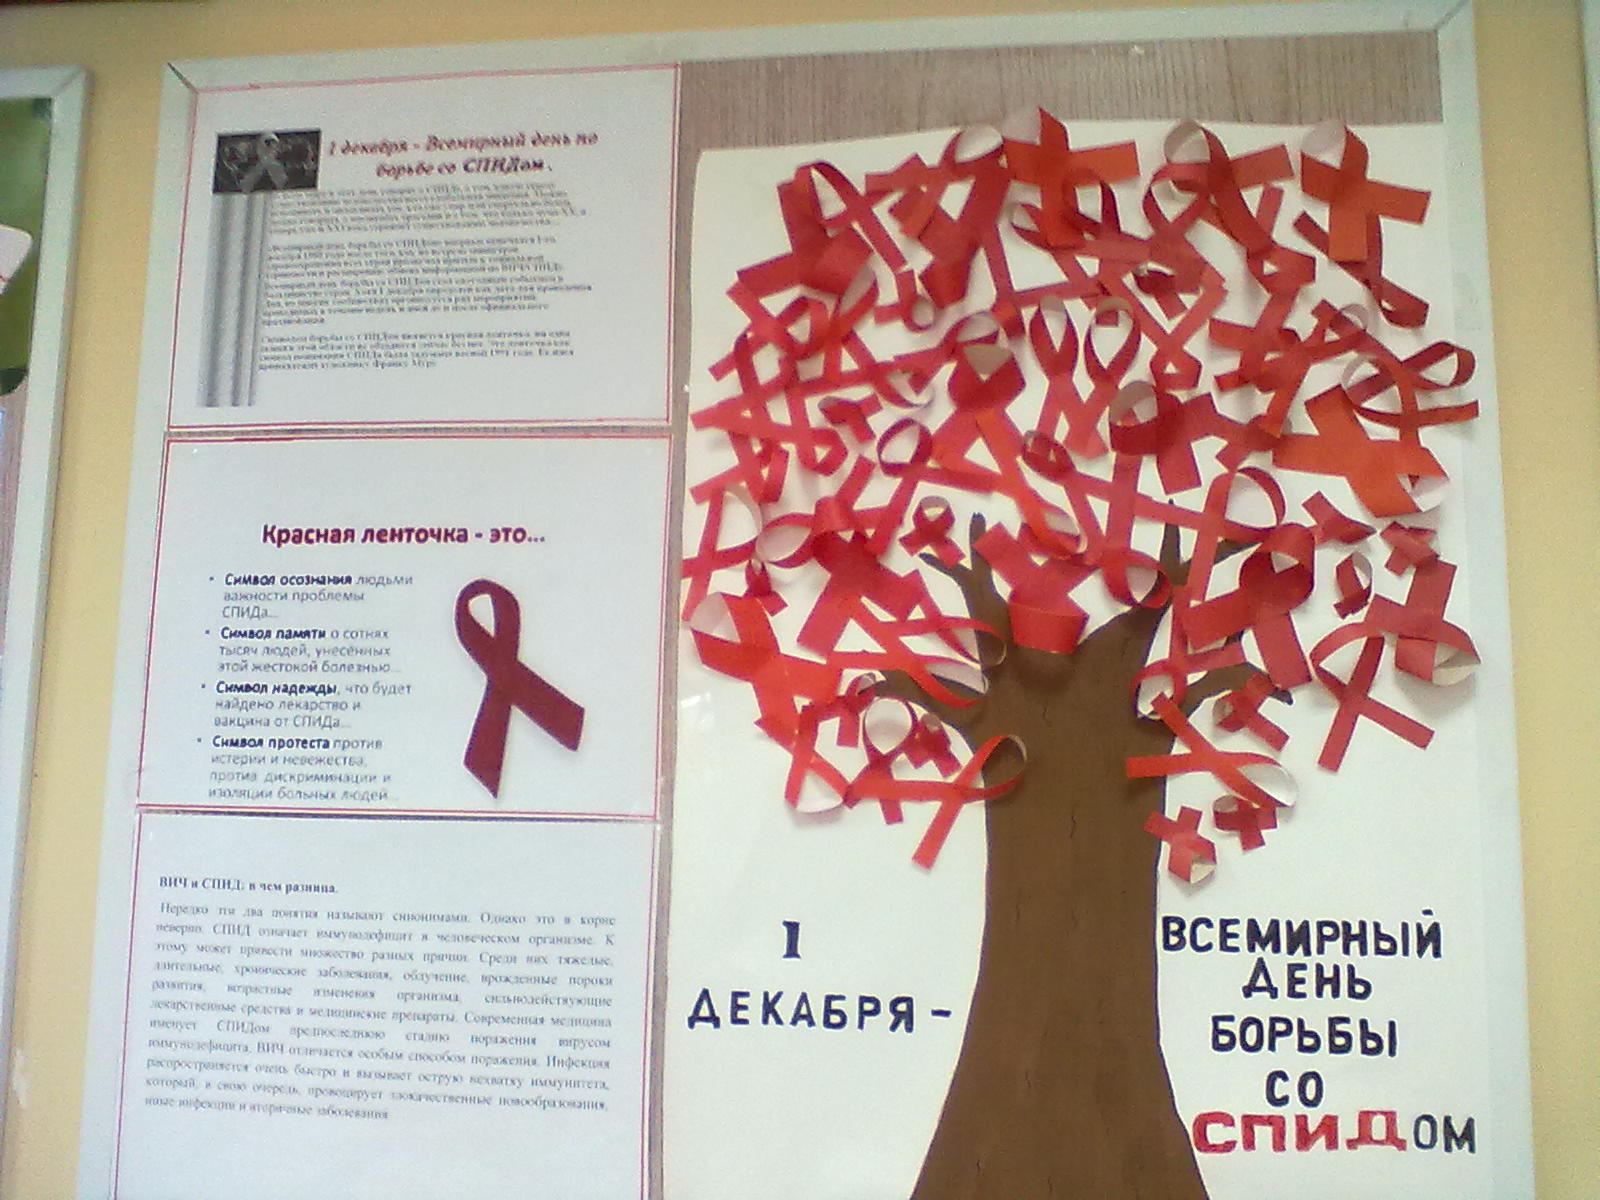 1 Декабря день борьбы со СПИДОМ плакат